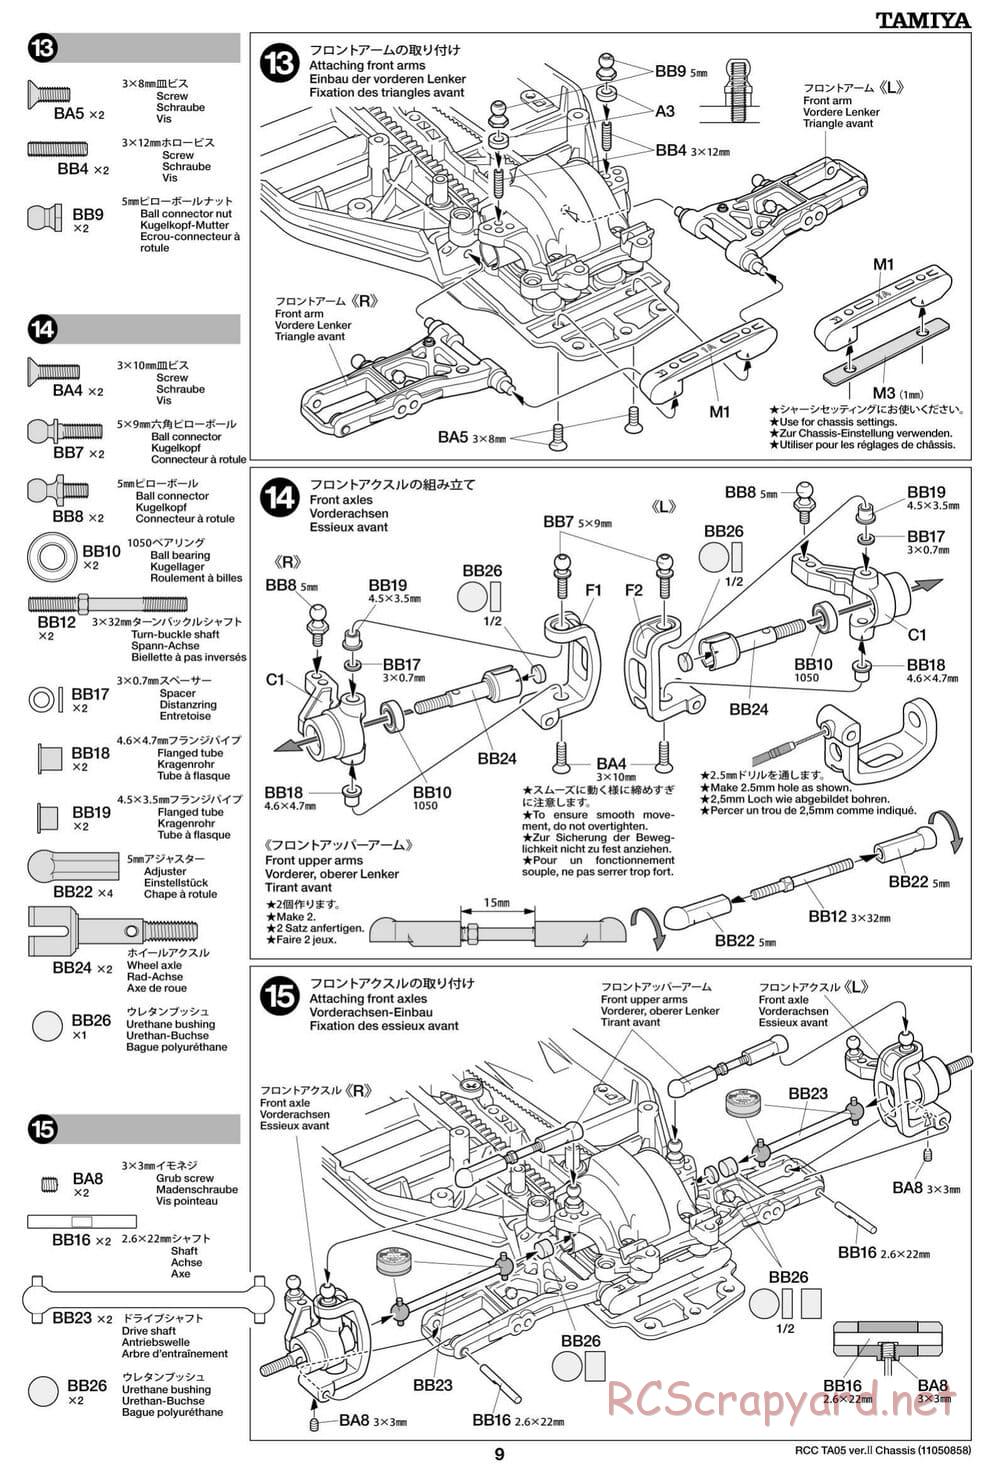 Tamiya - TA05 Ver.II Chassis - Manual - Page 9